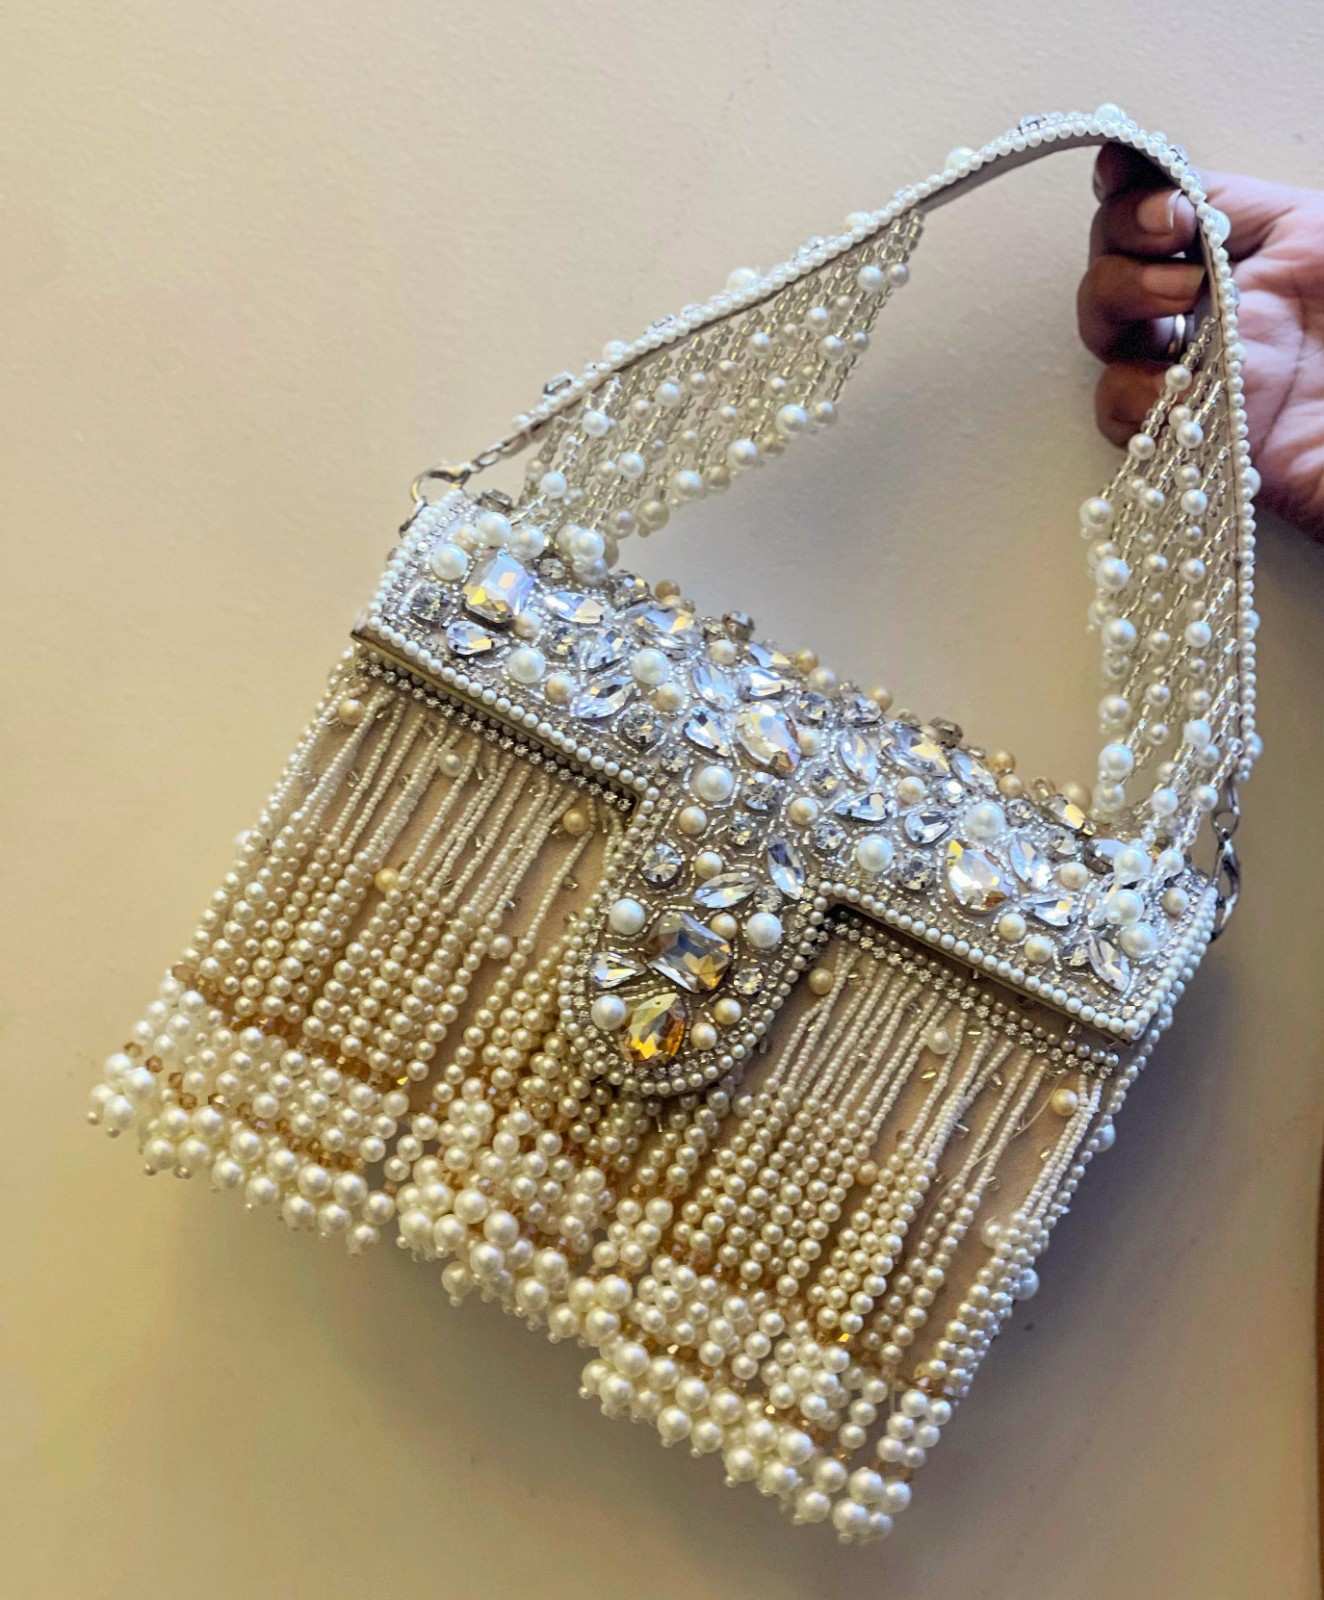 VEYIINA NERO Small Crossbody Handbags Phone Bags for Women Girls,Party Pearl  Clutch Purse Shoulder Bag (White) : Amazon.in: Fashion